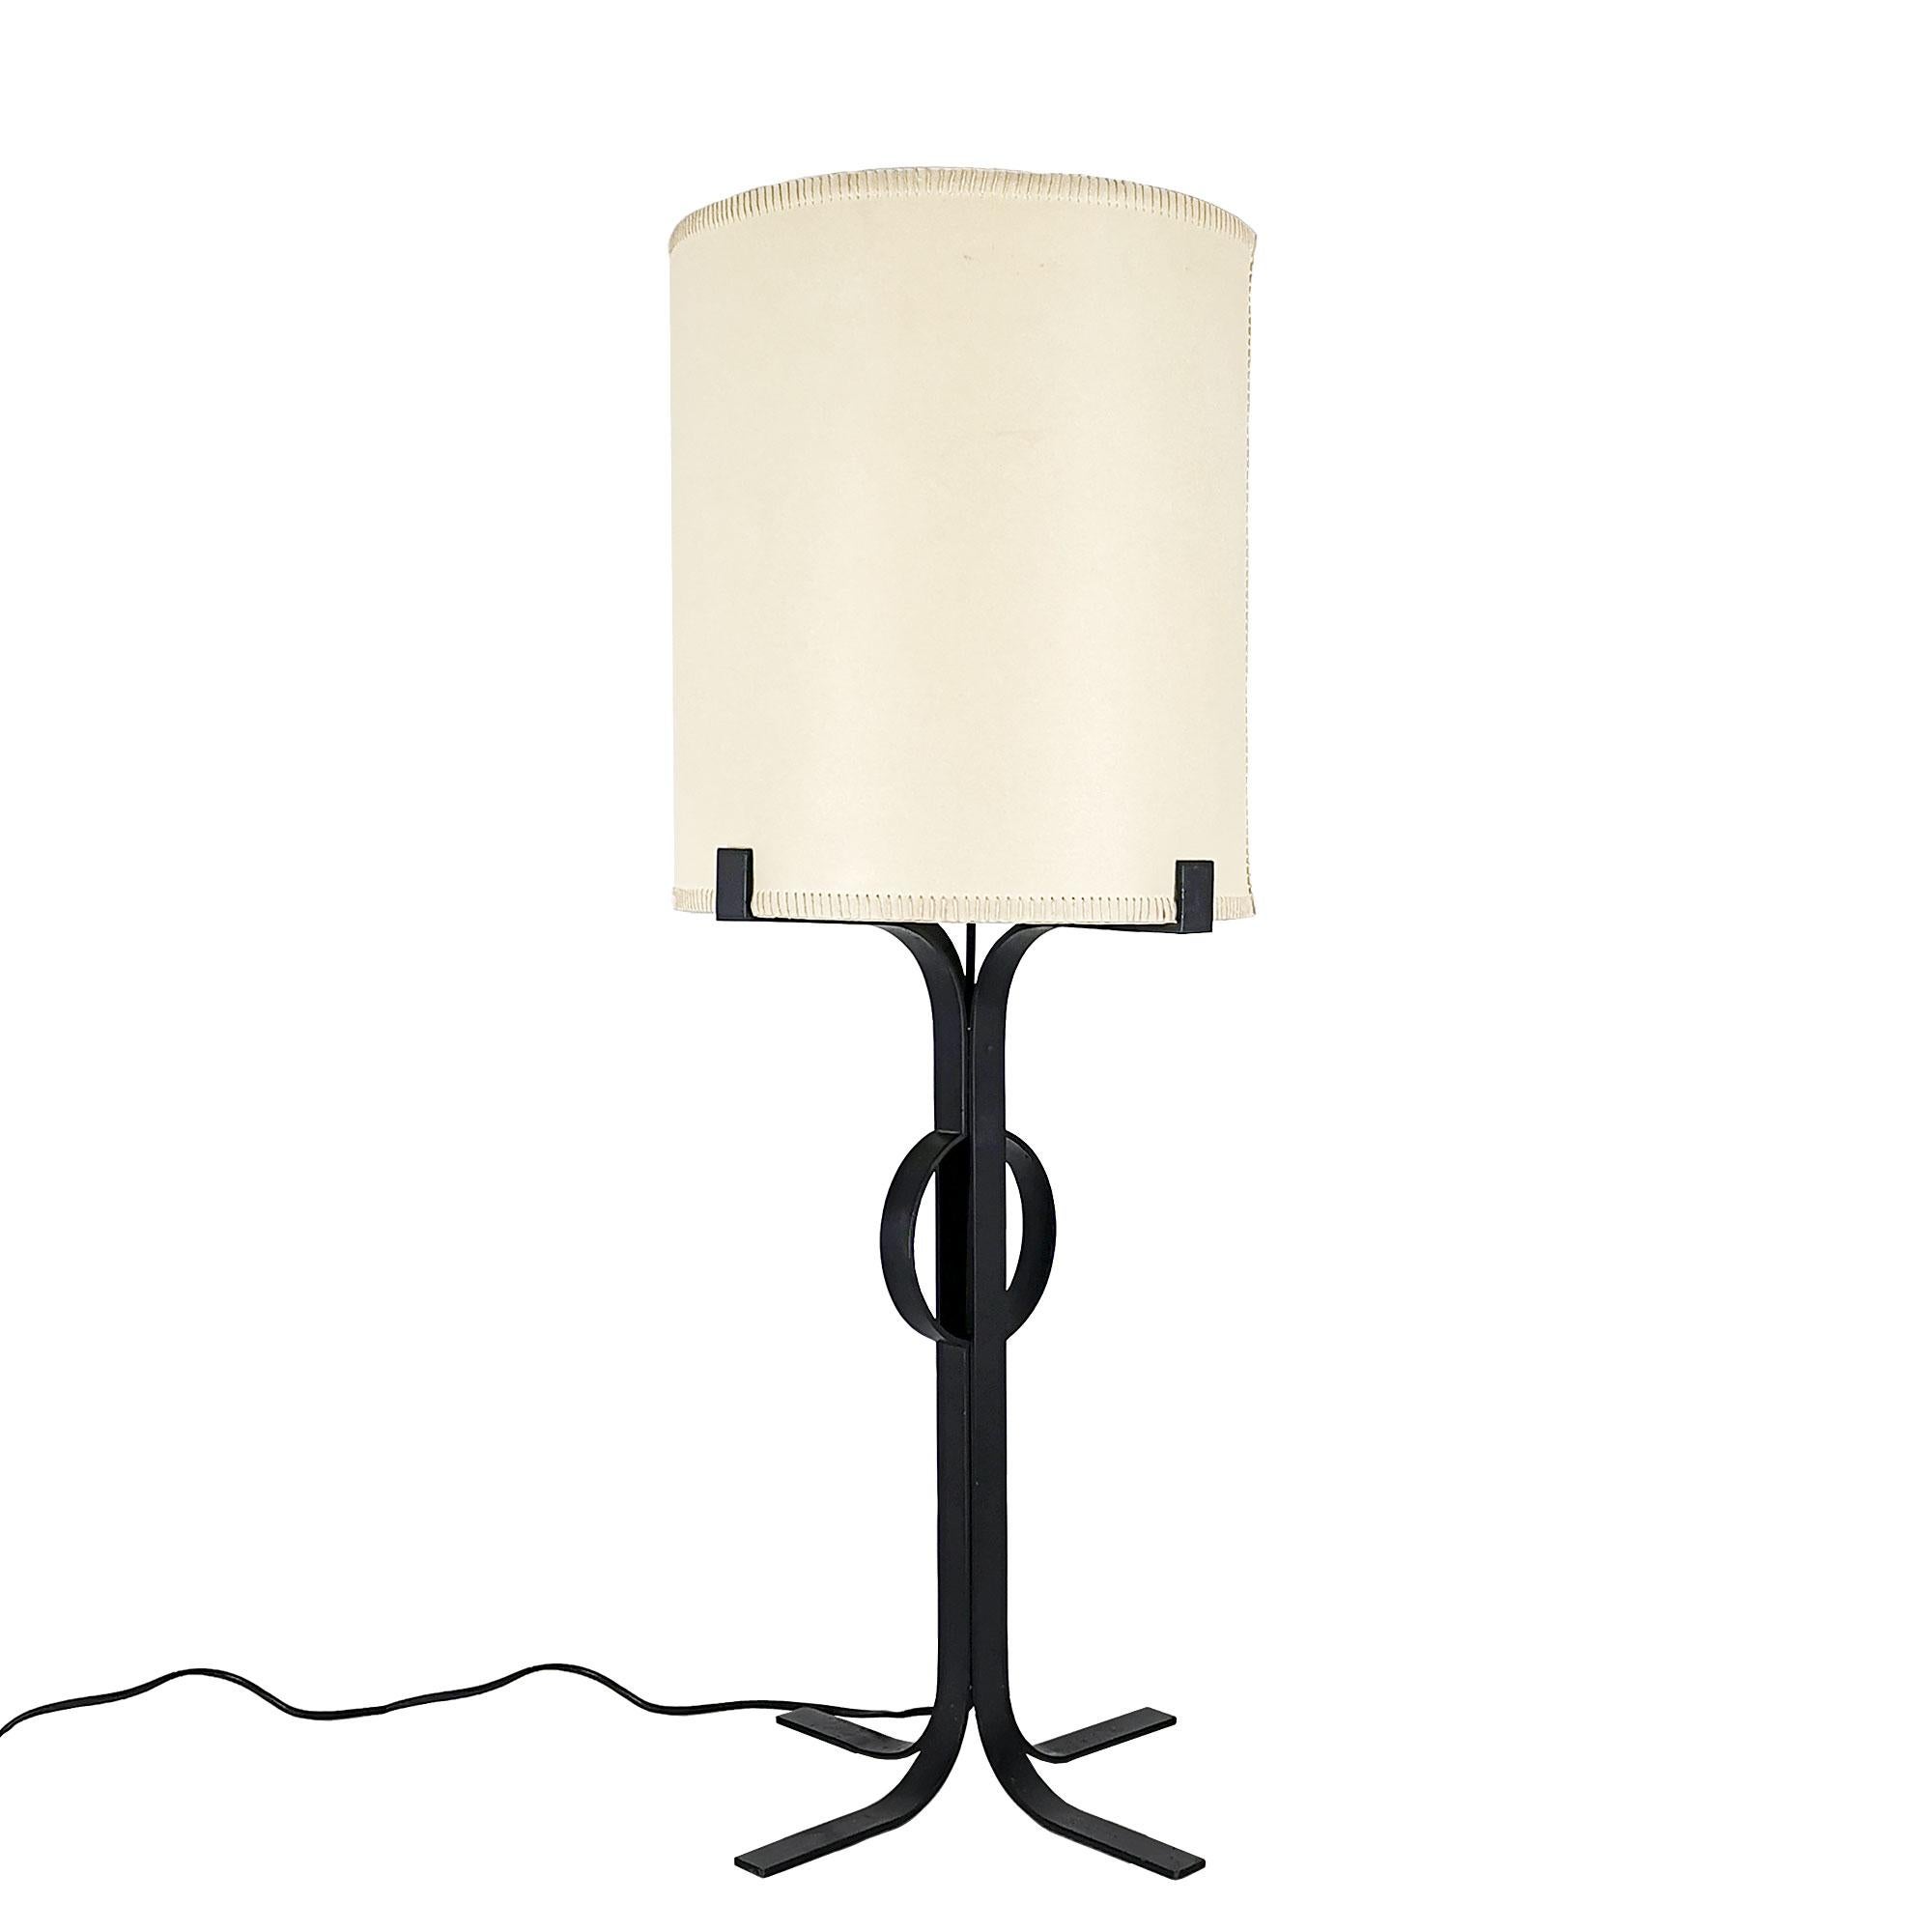 Large table lamp, wrought iron with four feet, parchment lampshade.

Design: Jordi Vilanova 

Spain, Barcelona c. 1960.